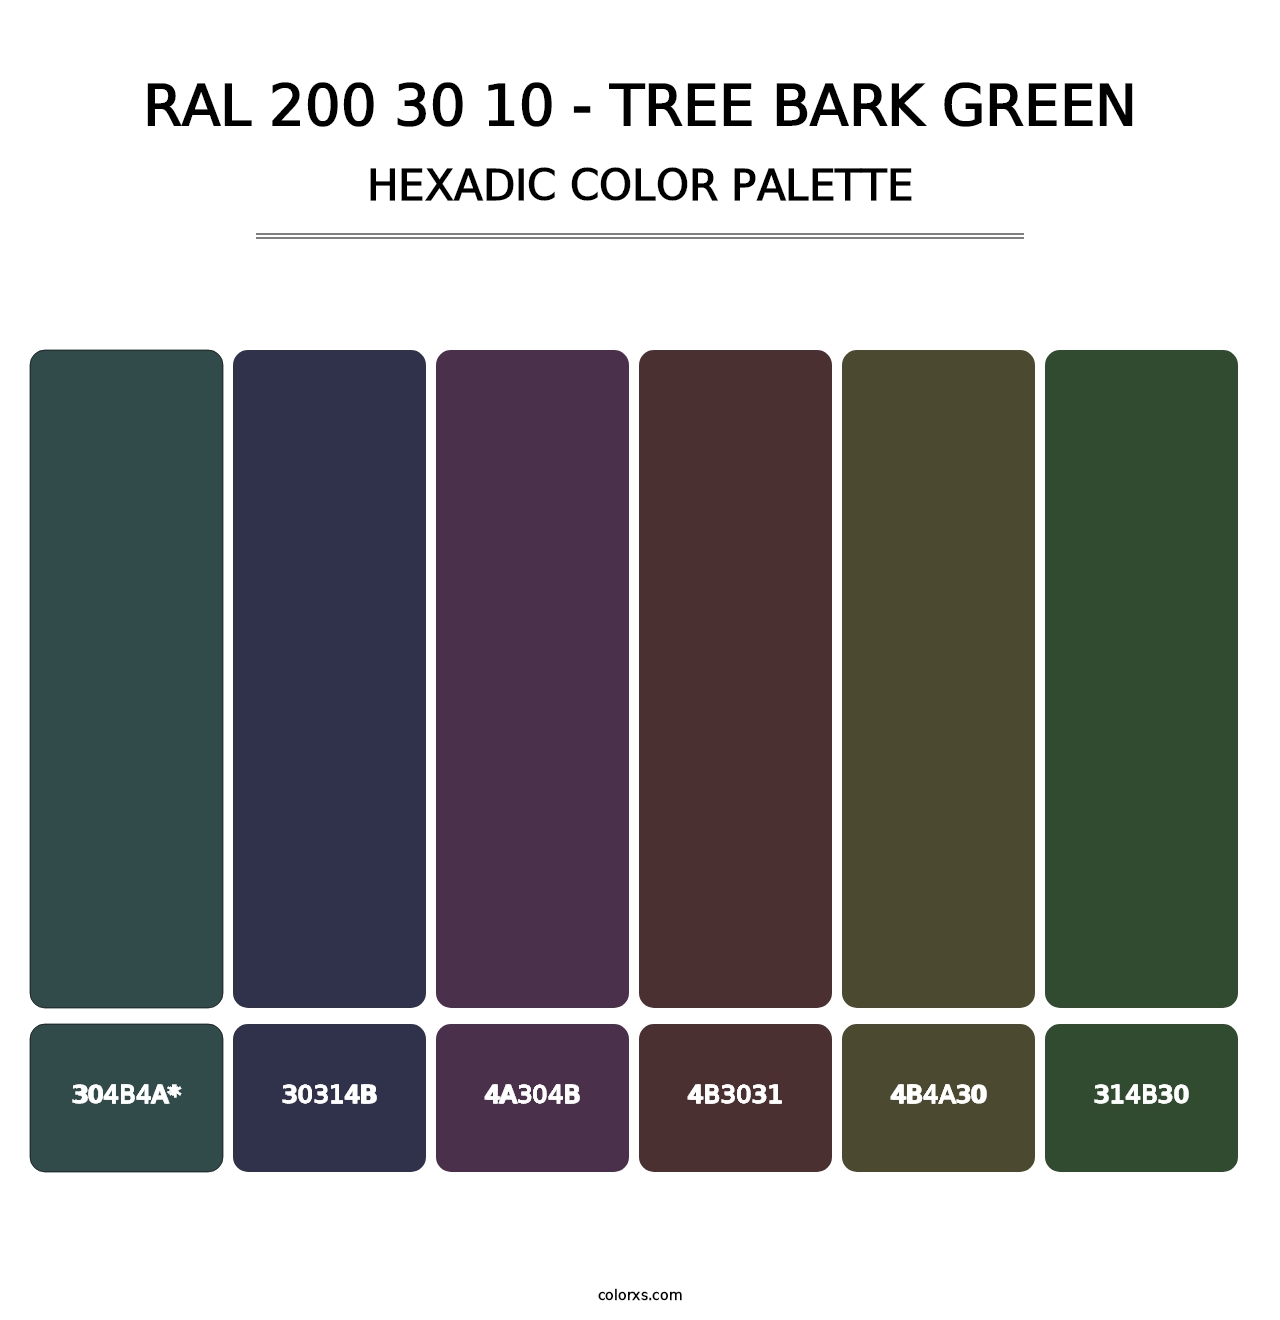 RAL 200 30 10 - Tree Bark Green - Hexadic Color Palette